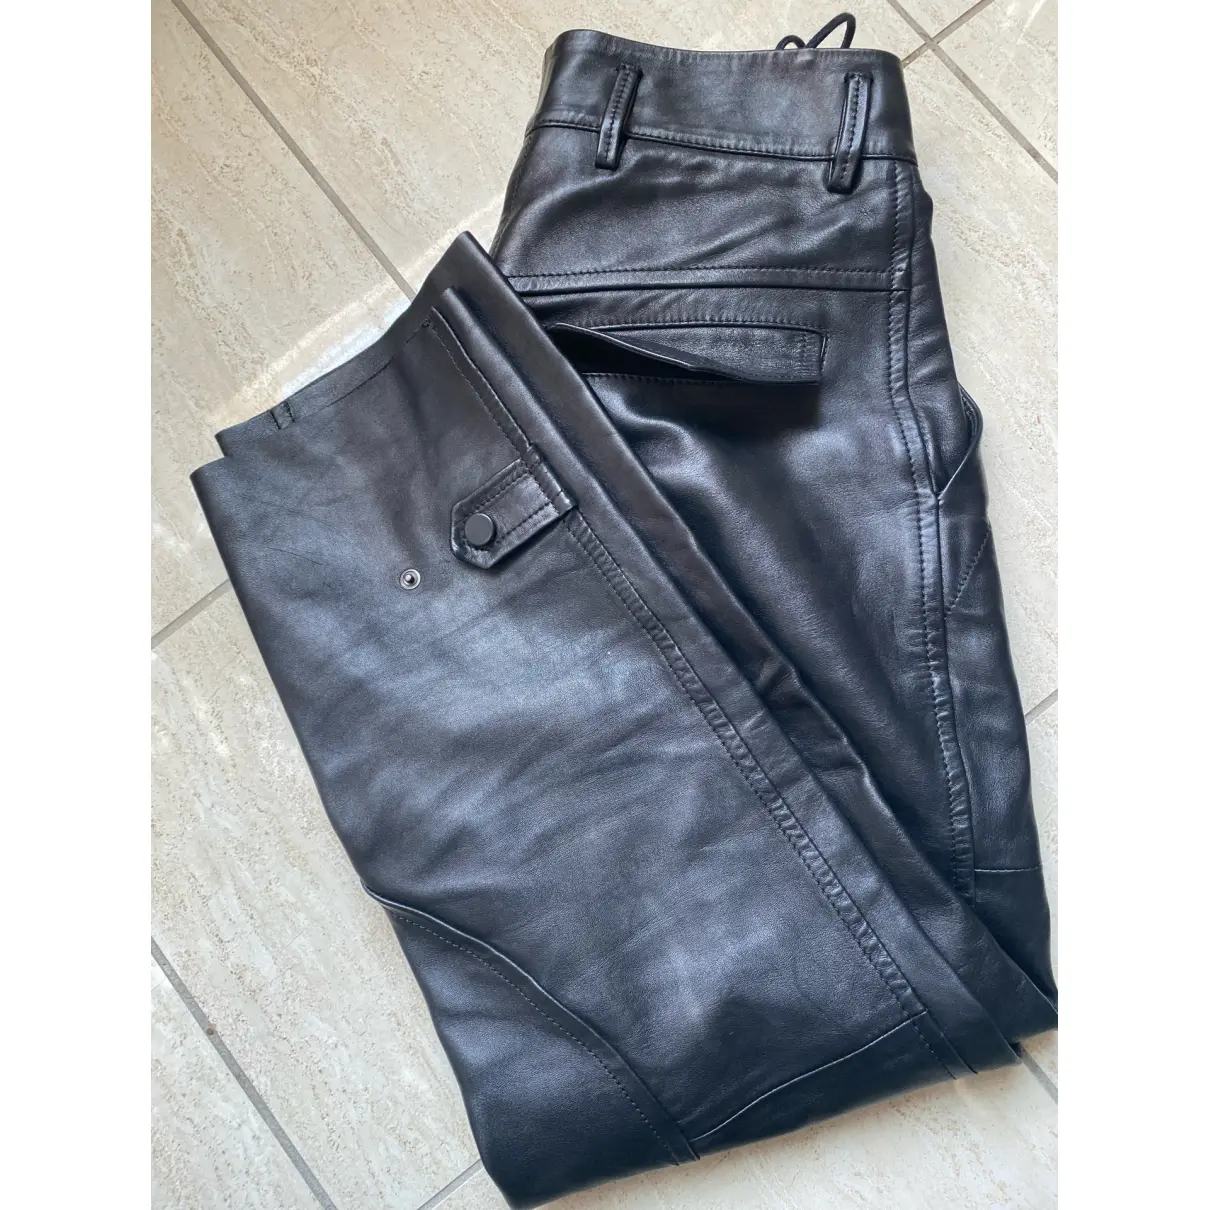 Buy Petar Petrov Leather straight pants online